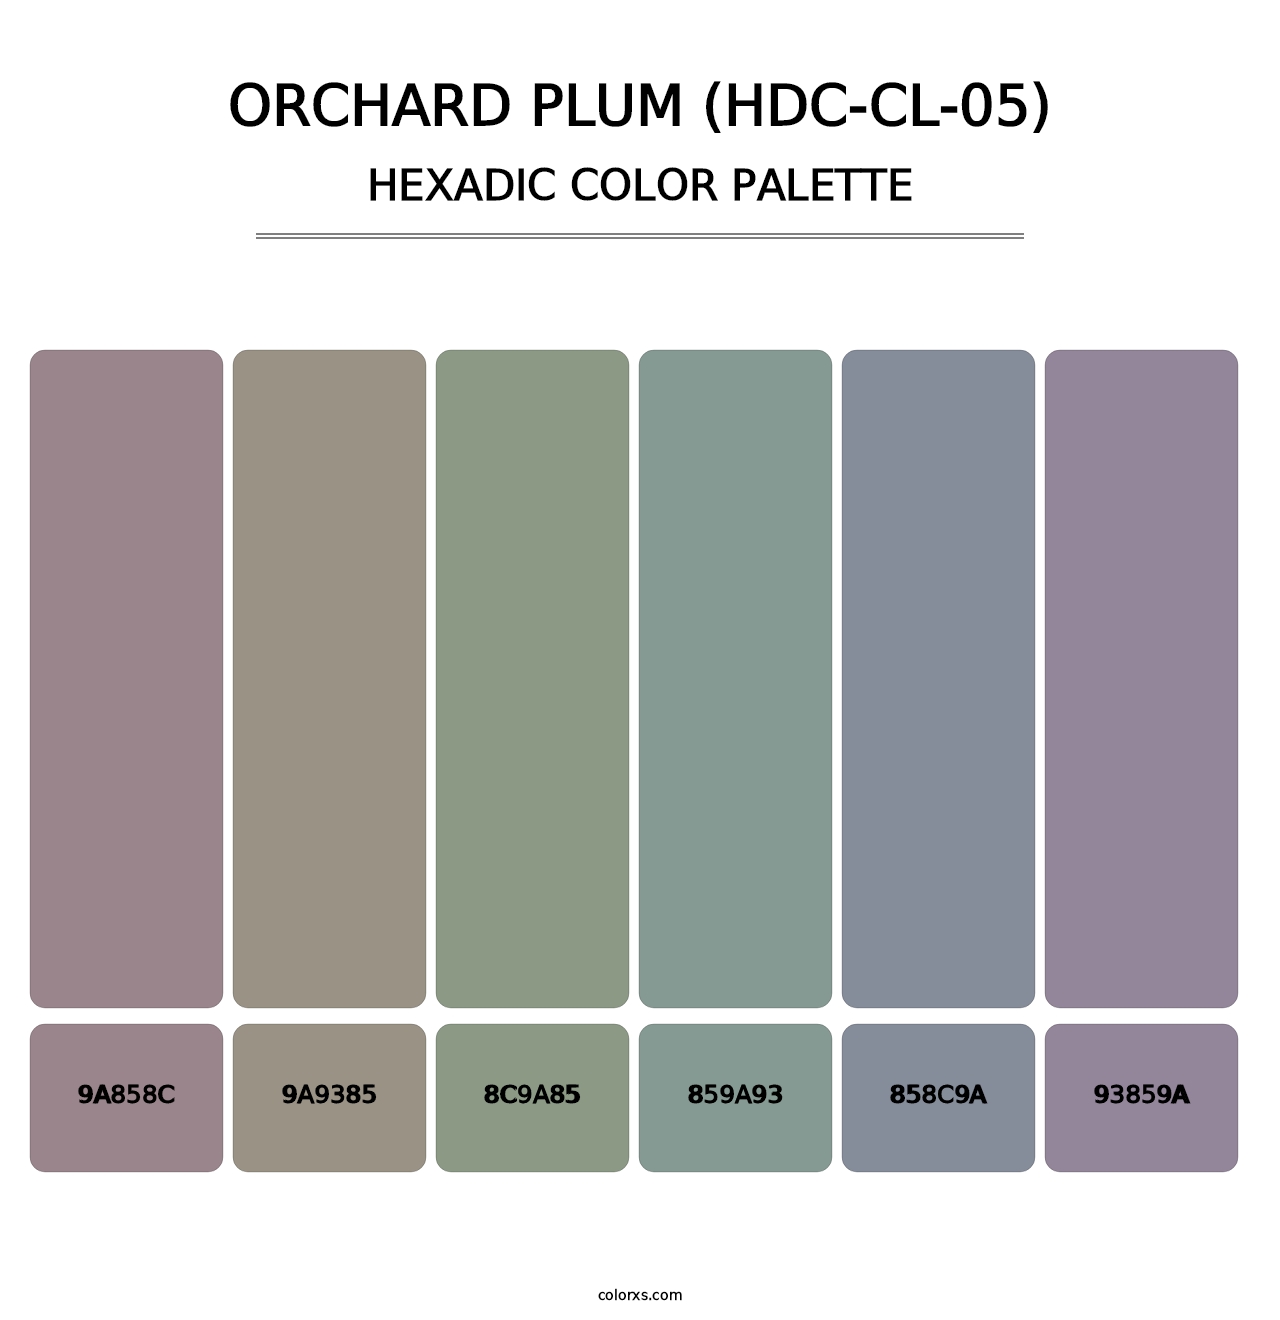 Orchard Plum (HDC-CL-05) - Hexadic Color Palette